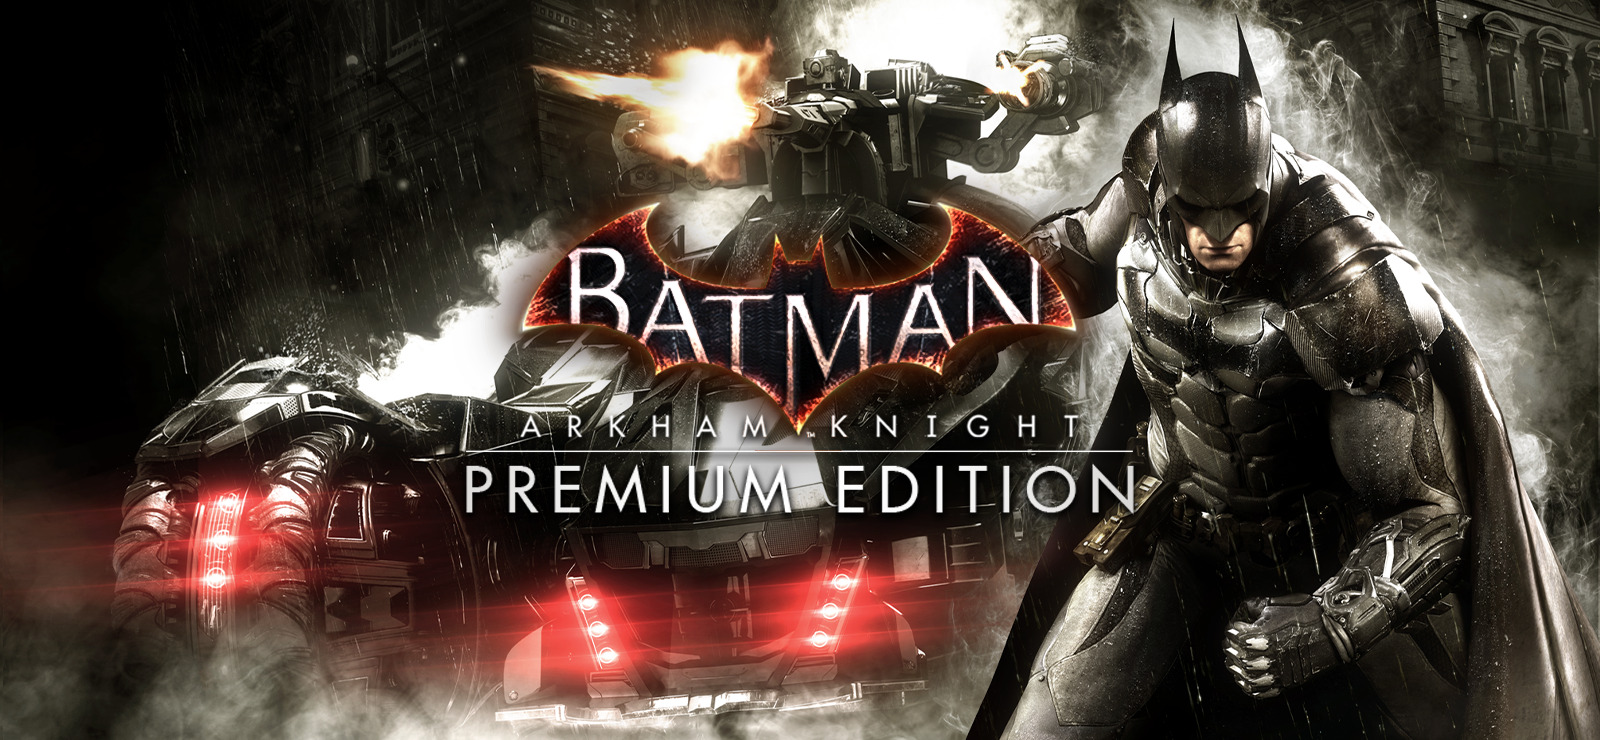 Batman™: Arkham Knight Premium Edition on 